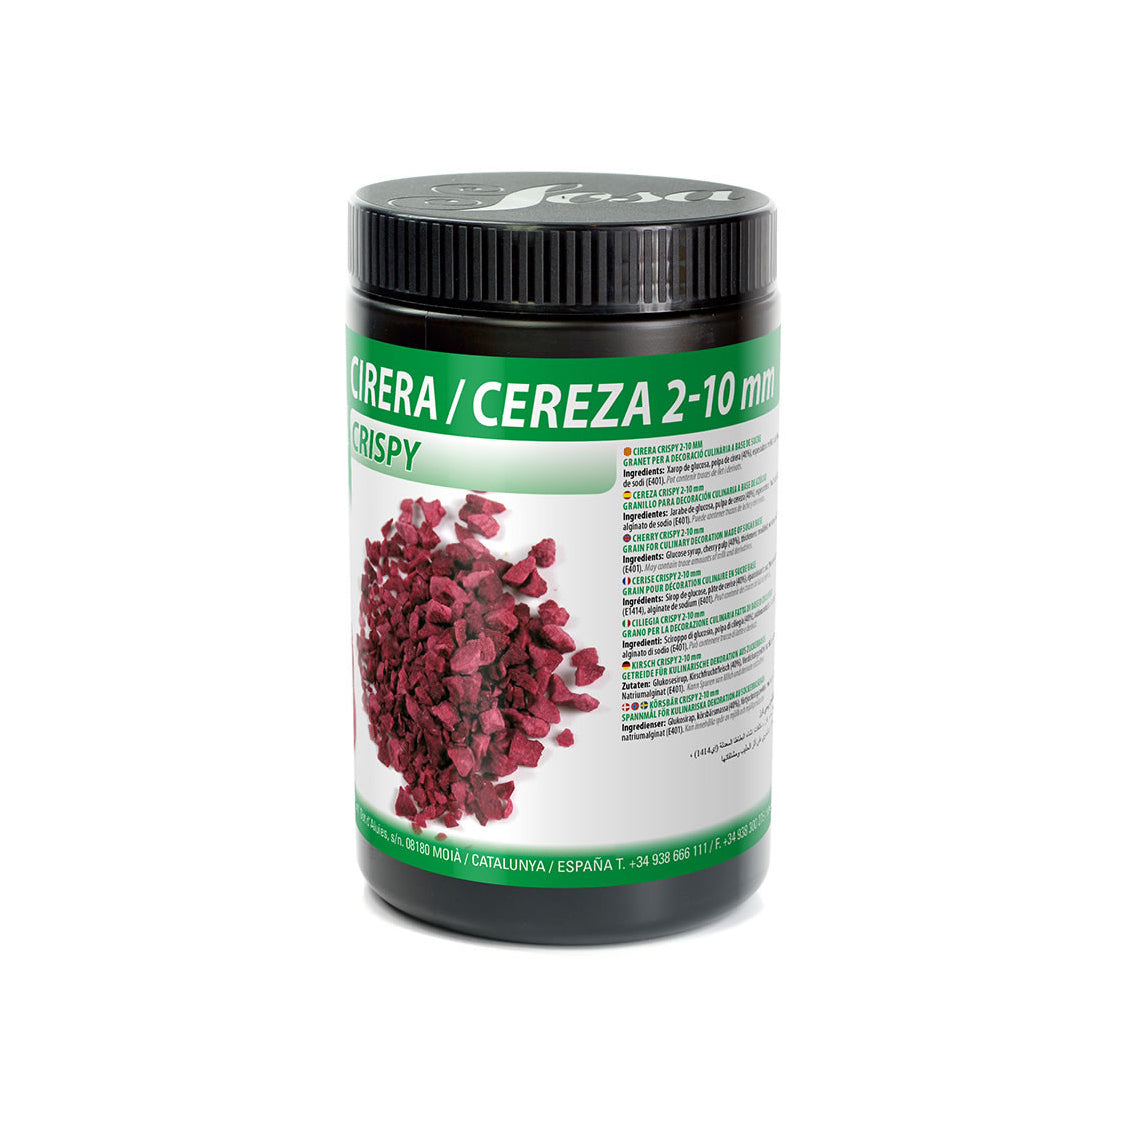 SOSA Freeze Dried Cherry Crispy 2-10mm, 200g